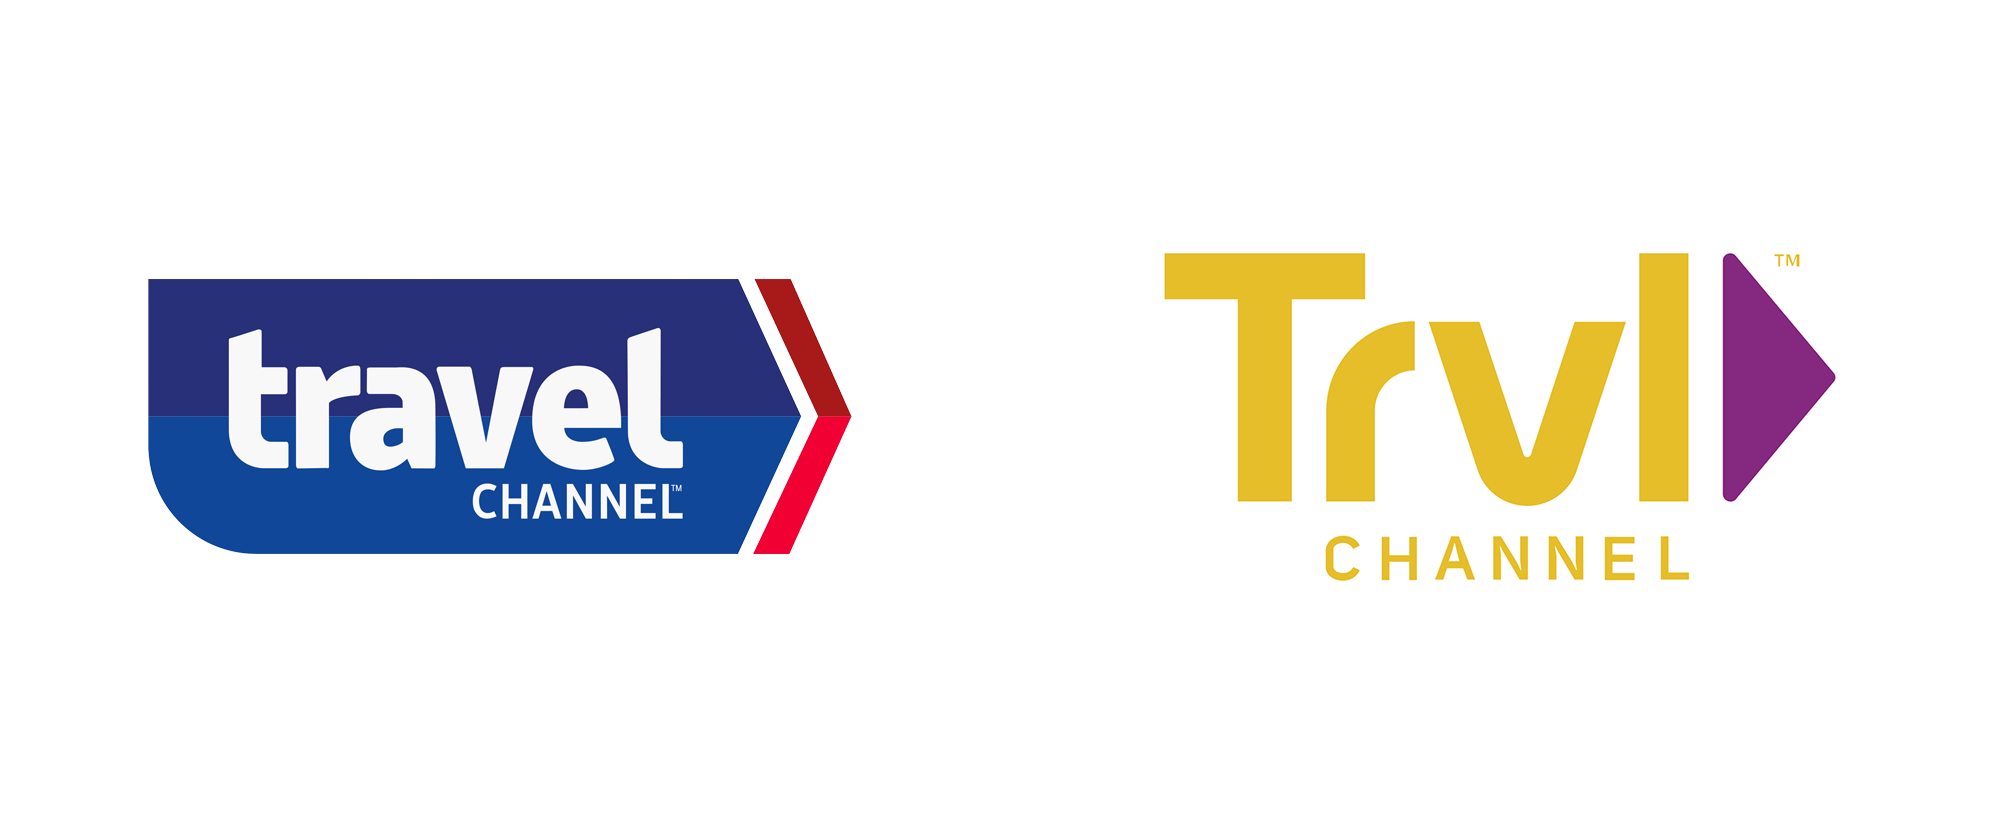 Google Channel Logo - Brand New: New Logo for Travel Channel